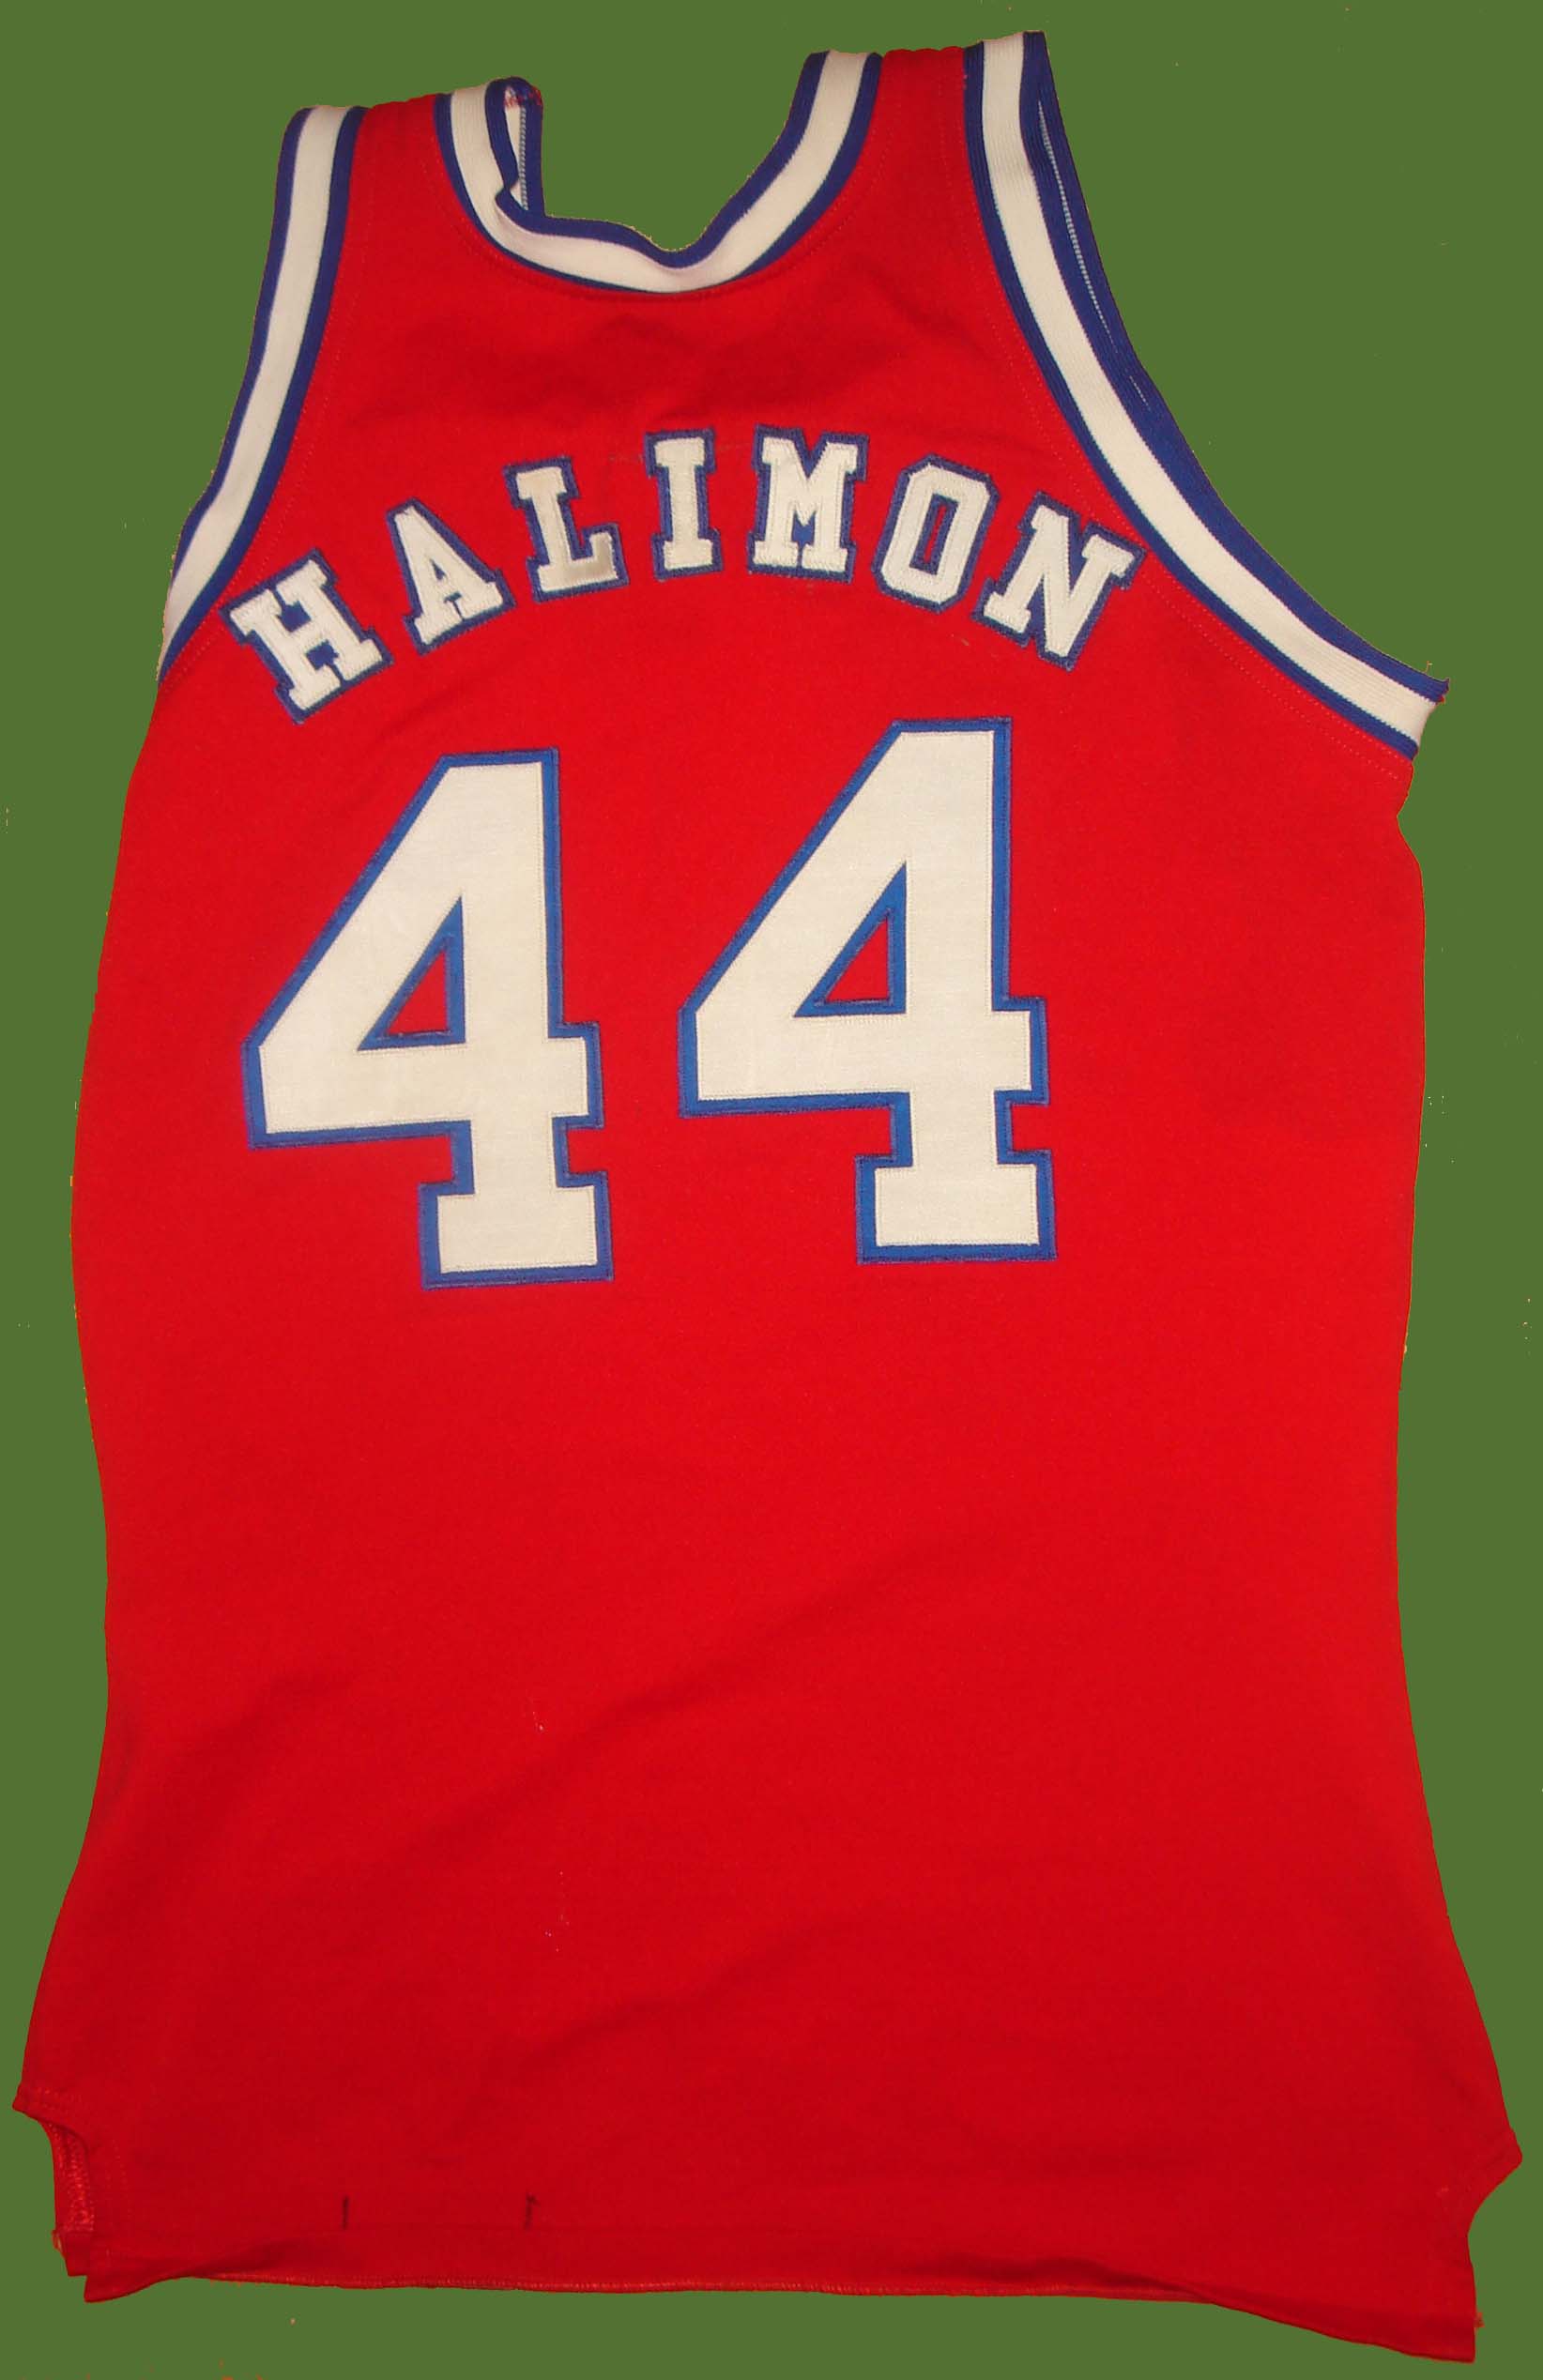 Basketball Jerseys Custom Name #Dallas Chaps Retro ABA Jersey New Sewn White